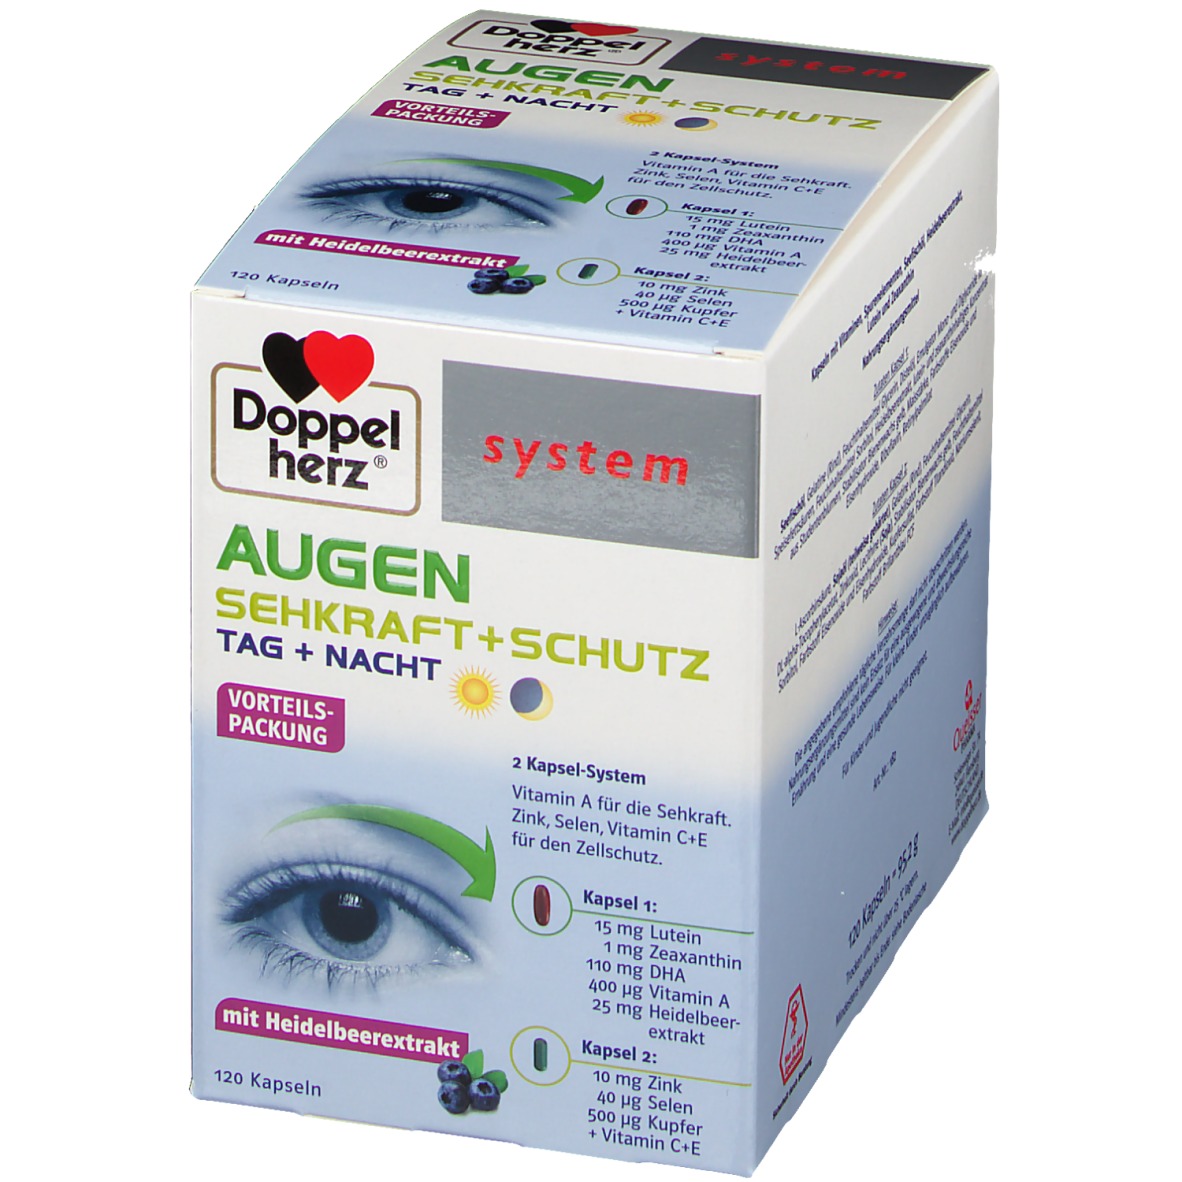 Doppelherz® system AUGEN SEHKRAFT + SCHUTZ 120 St - shop-apotheke.at